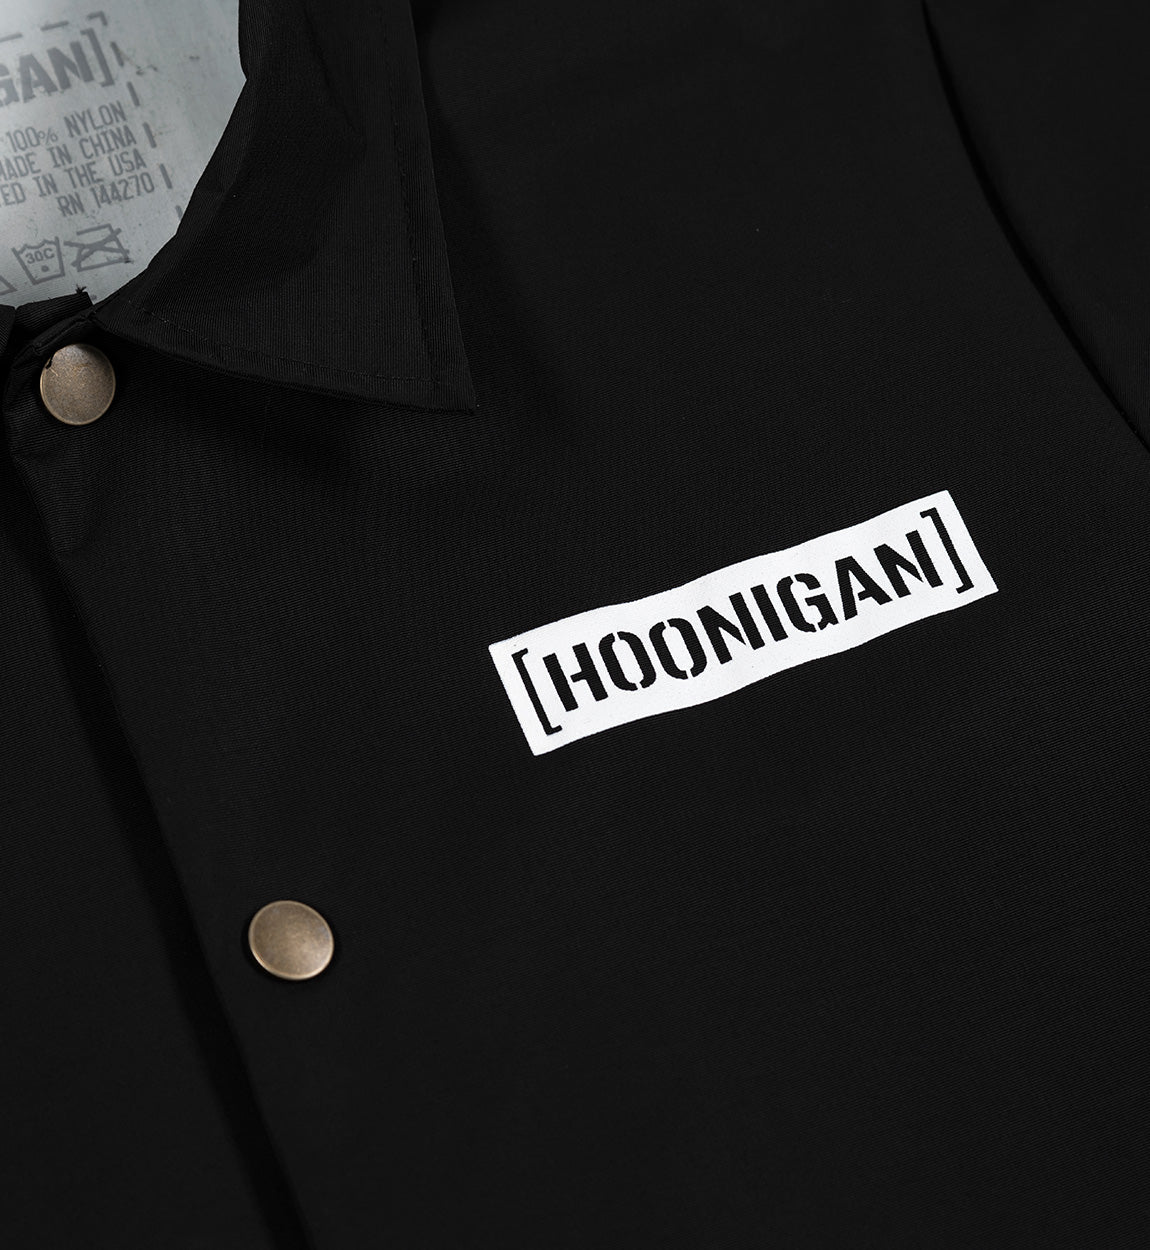 Hoonigan SCOTTO'S BOLT RESTORATION SERVICE coach jacket